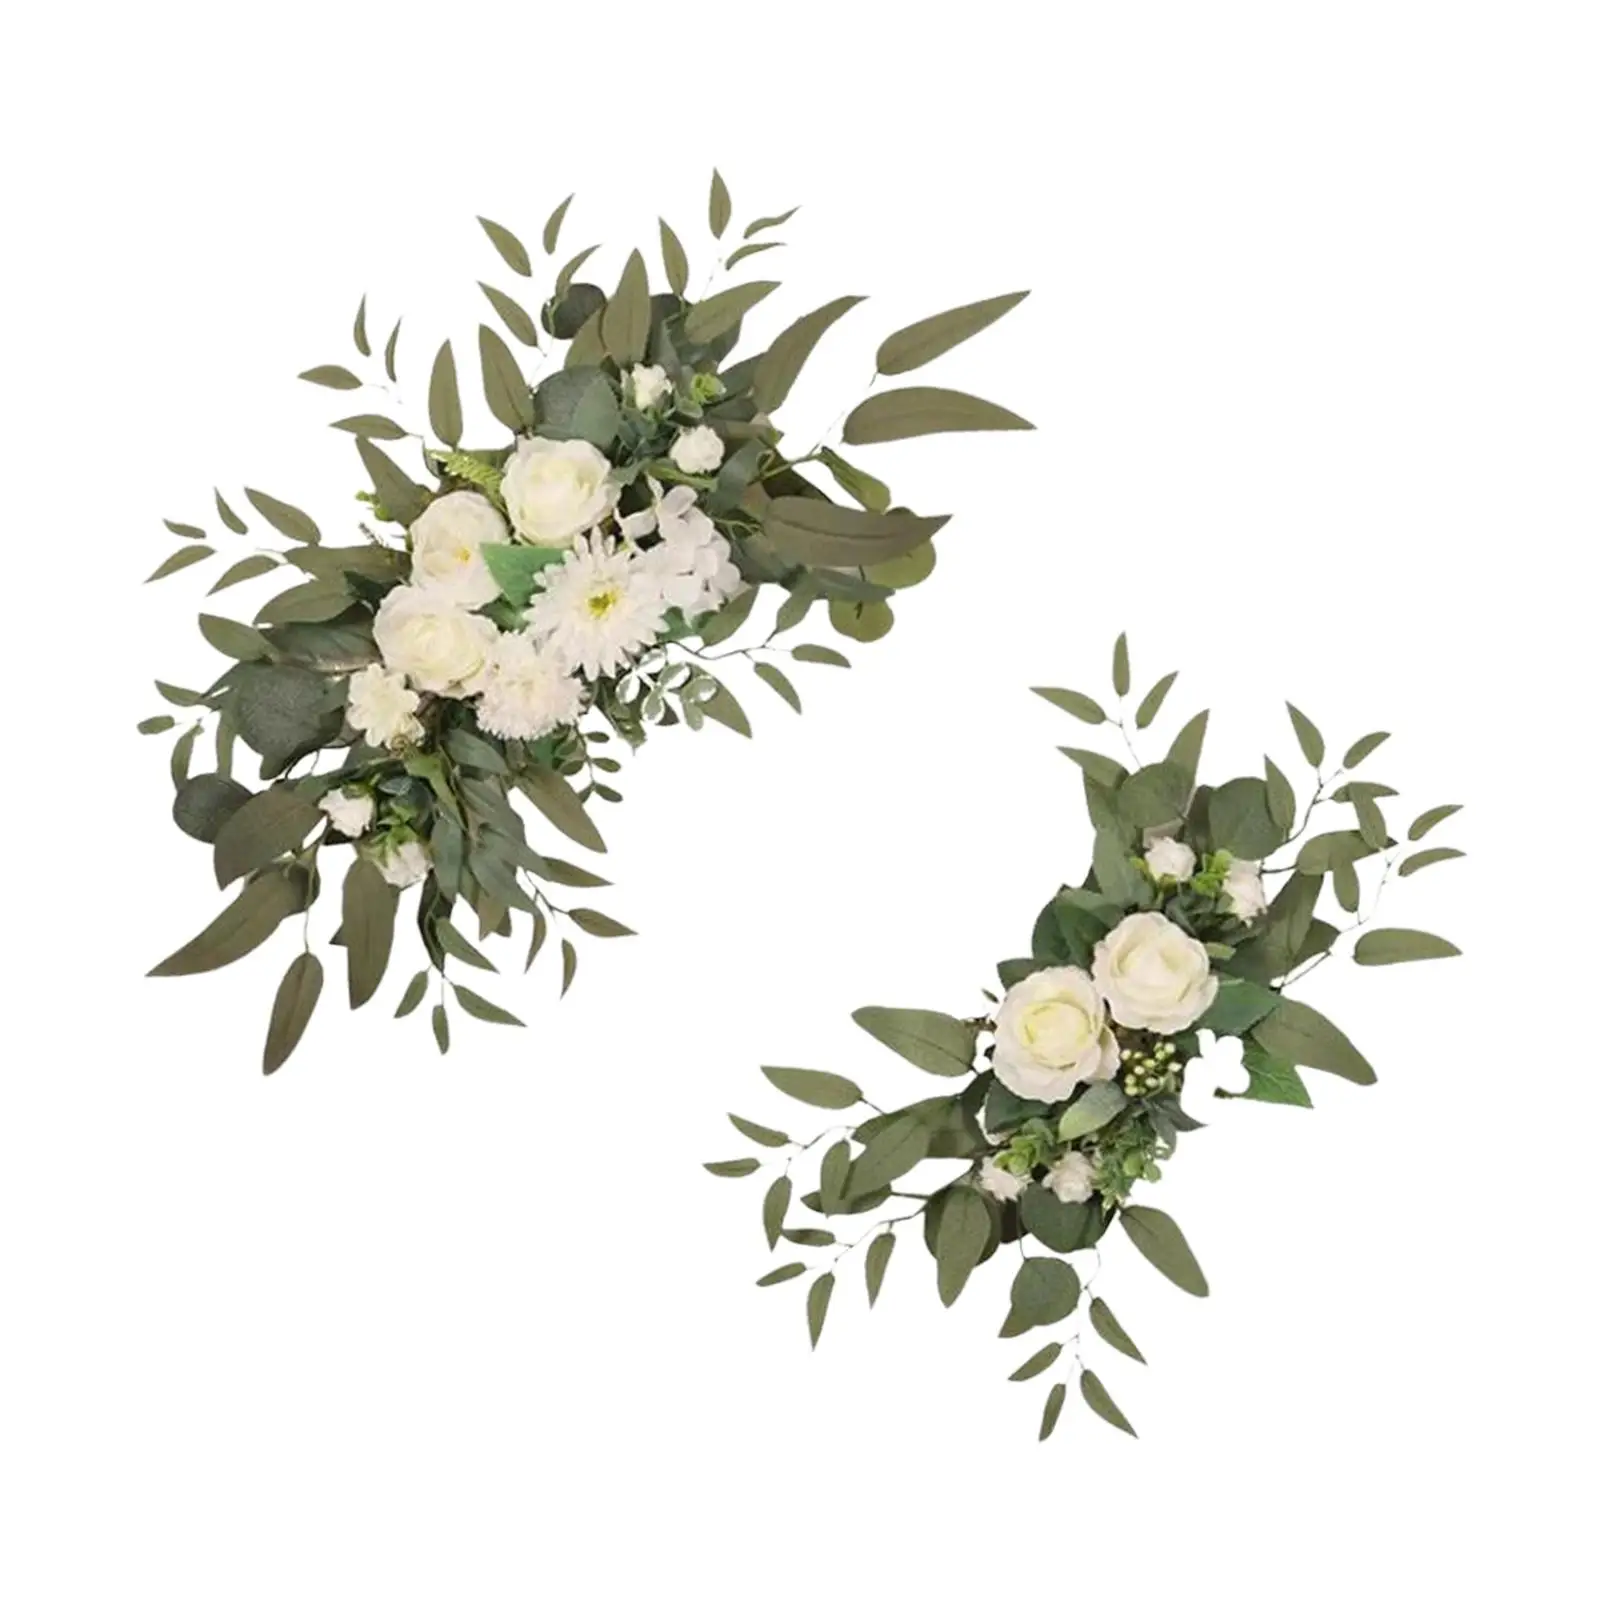 2 Pieces Artificial Wedding Arch Flowers Elegant Weddings Decorative Floral Swag for Front Door Ceremony Decor